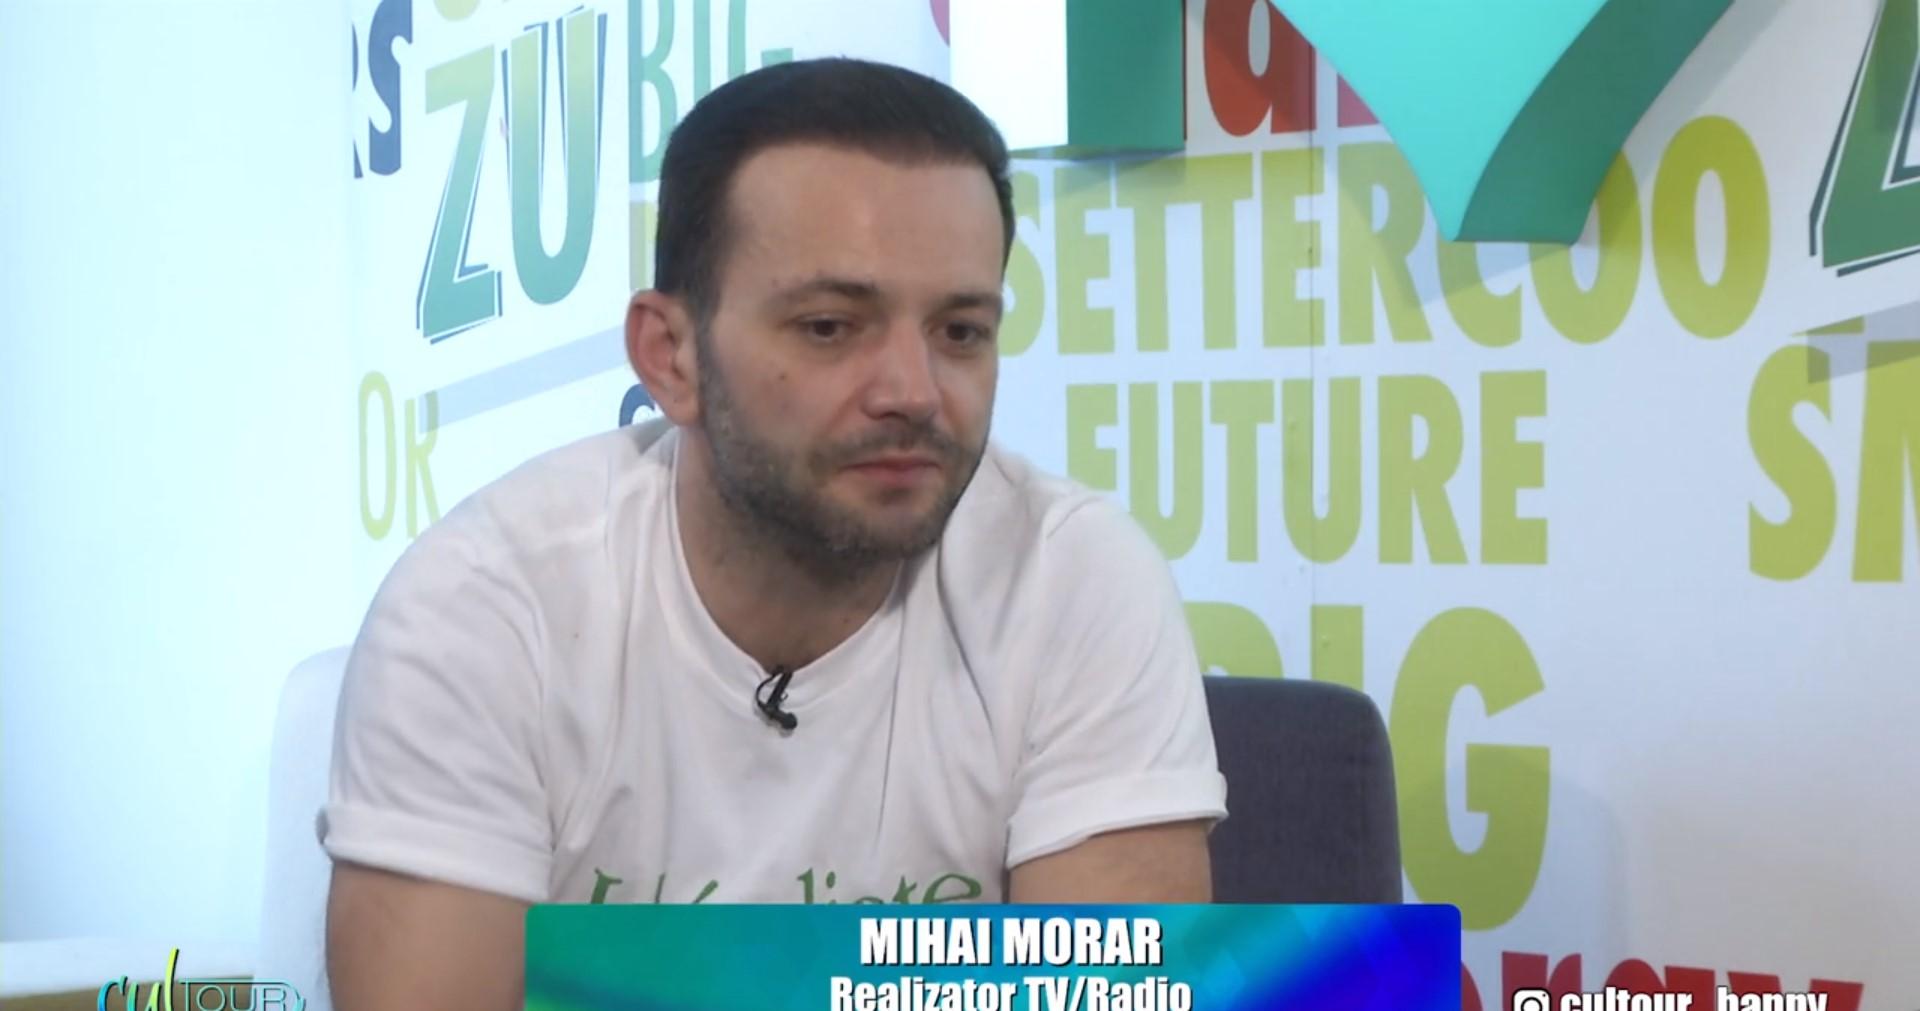 doorway Make an effort ticket CulTour 2021: De 8 martie, Mihai Morar a vorbit despre femeile din viața lui